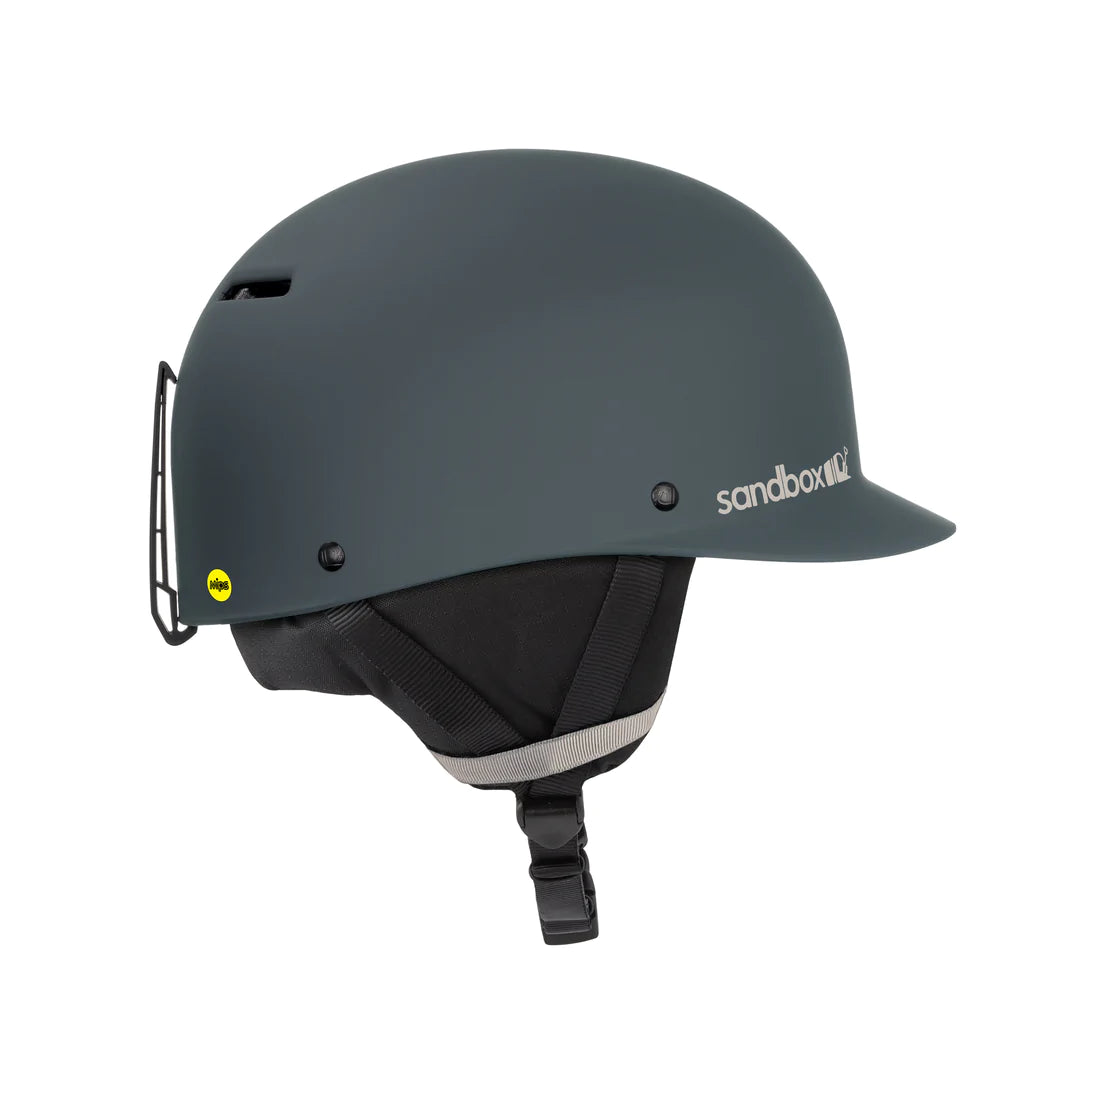 Sandbox 2.0 Classic Snow - Helmet Sand - Size M